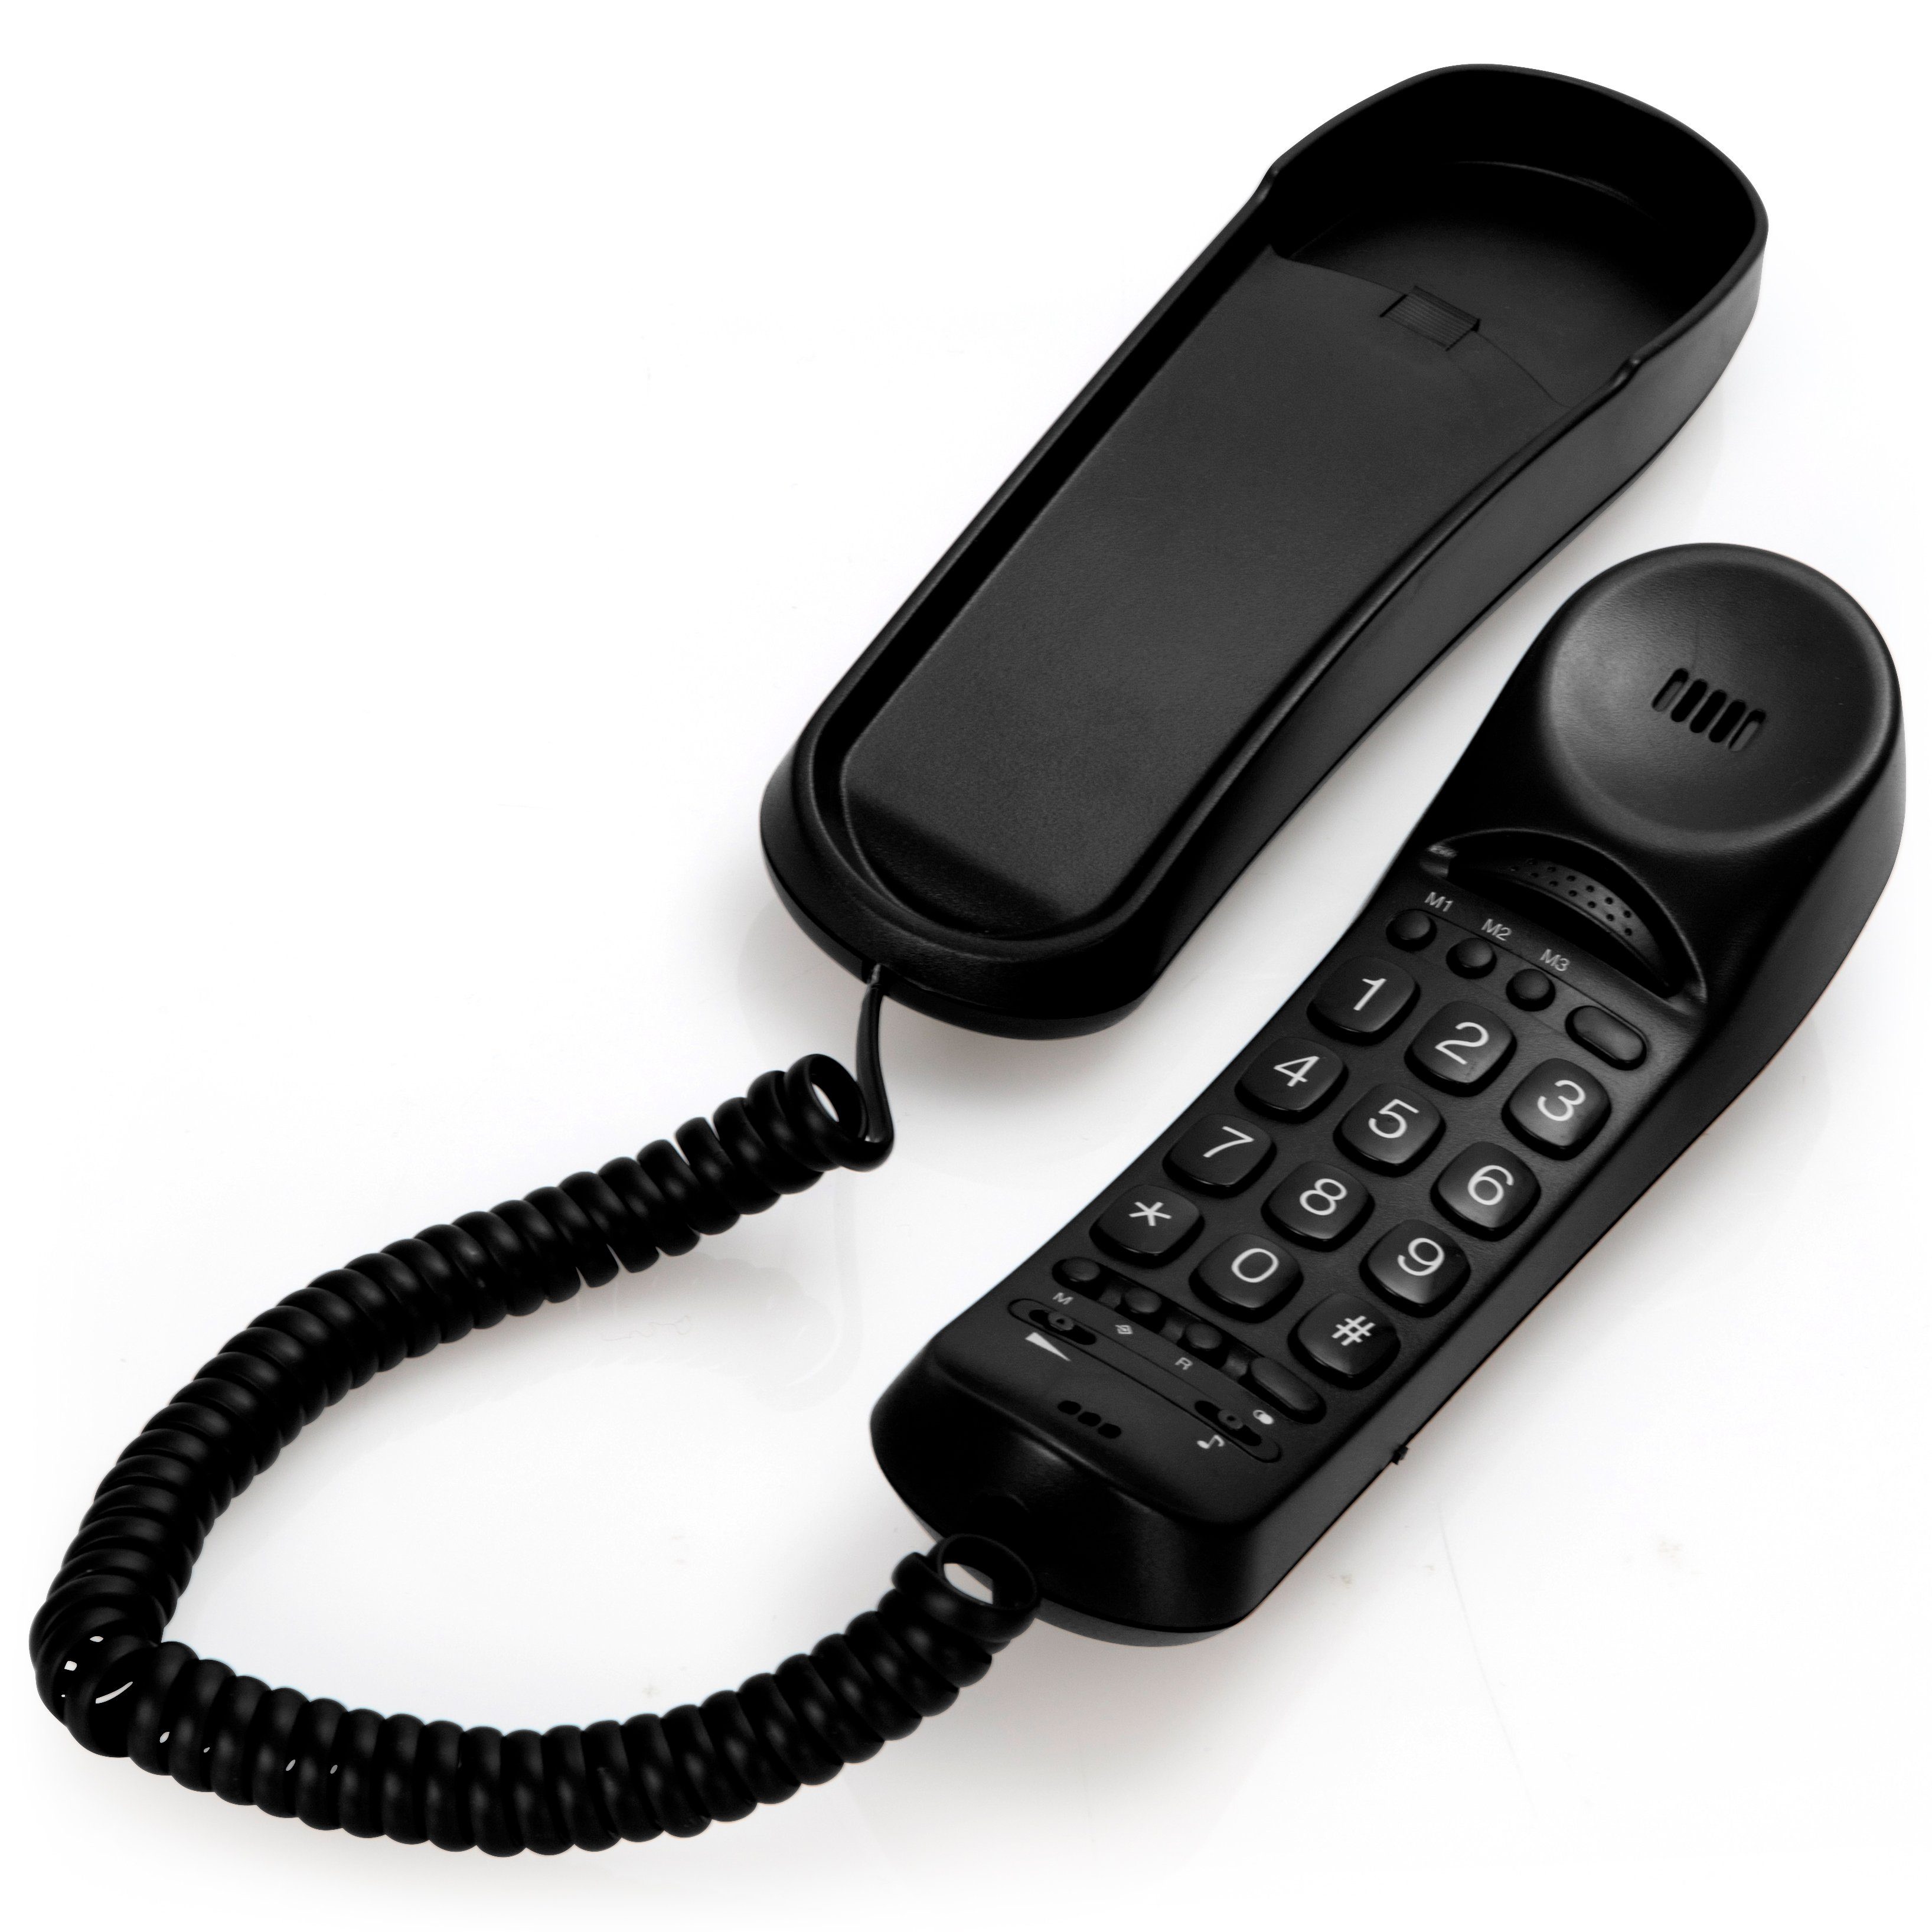 Festnetztelefon Fysic FX-2800